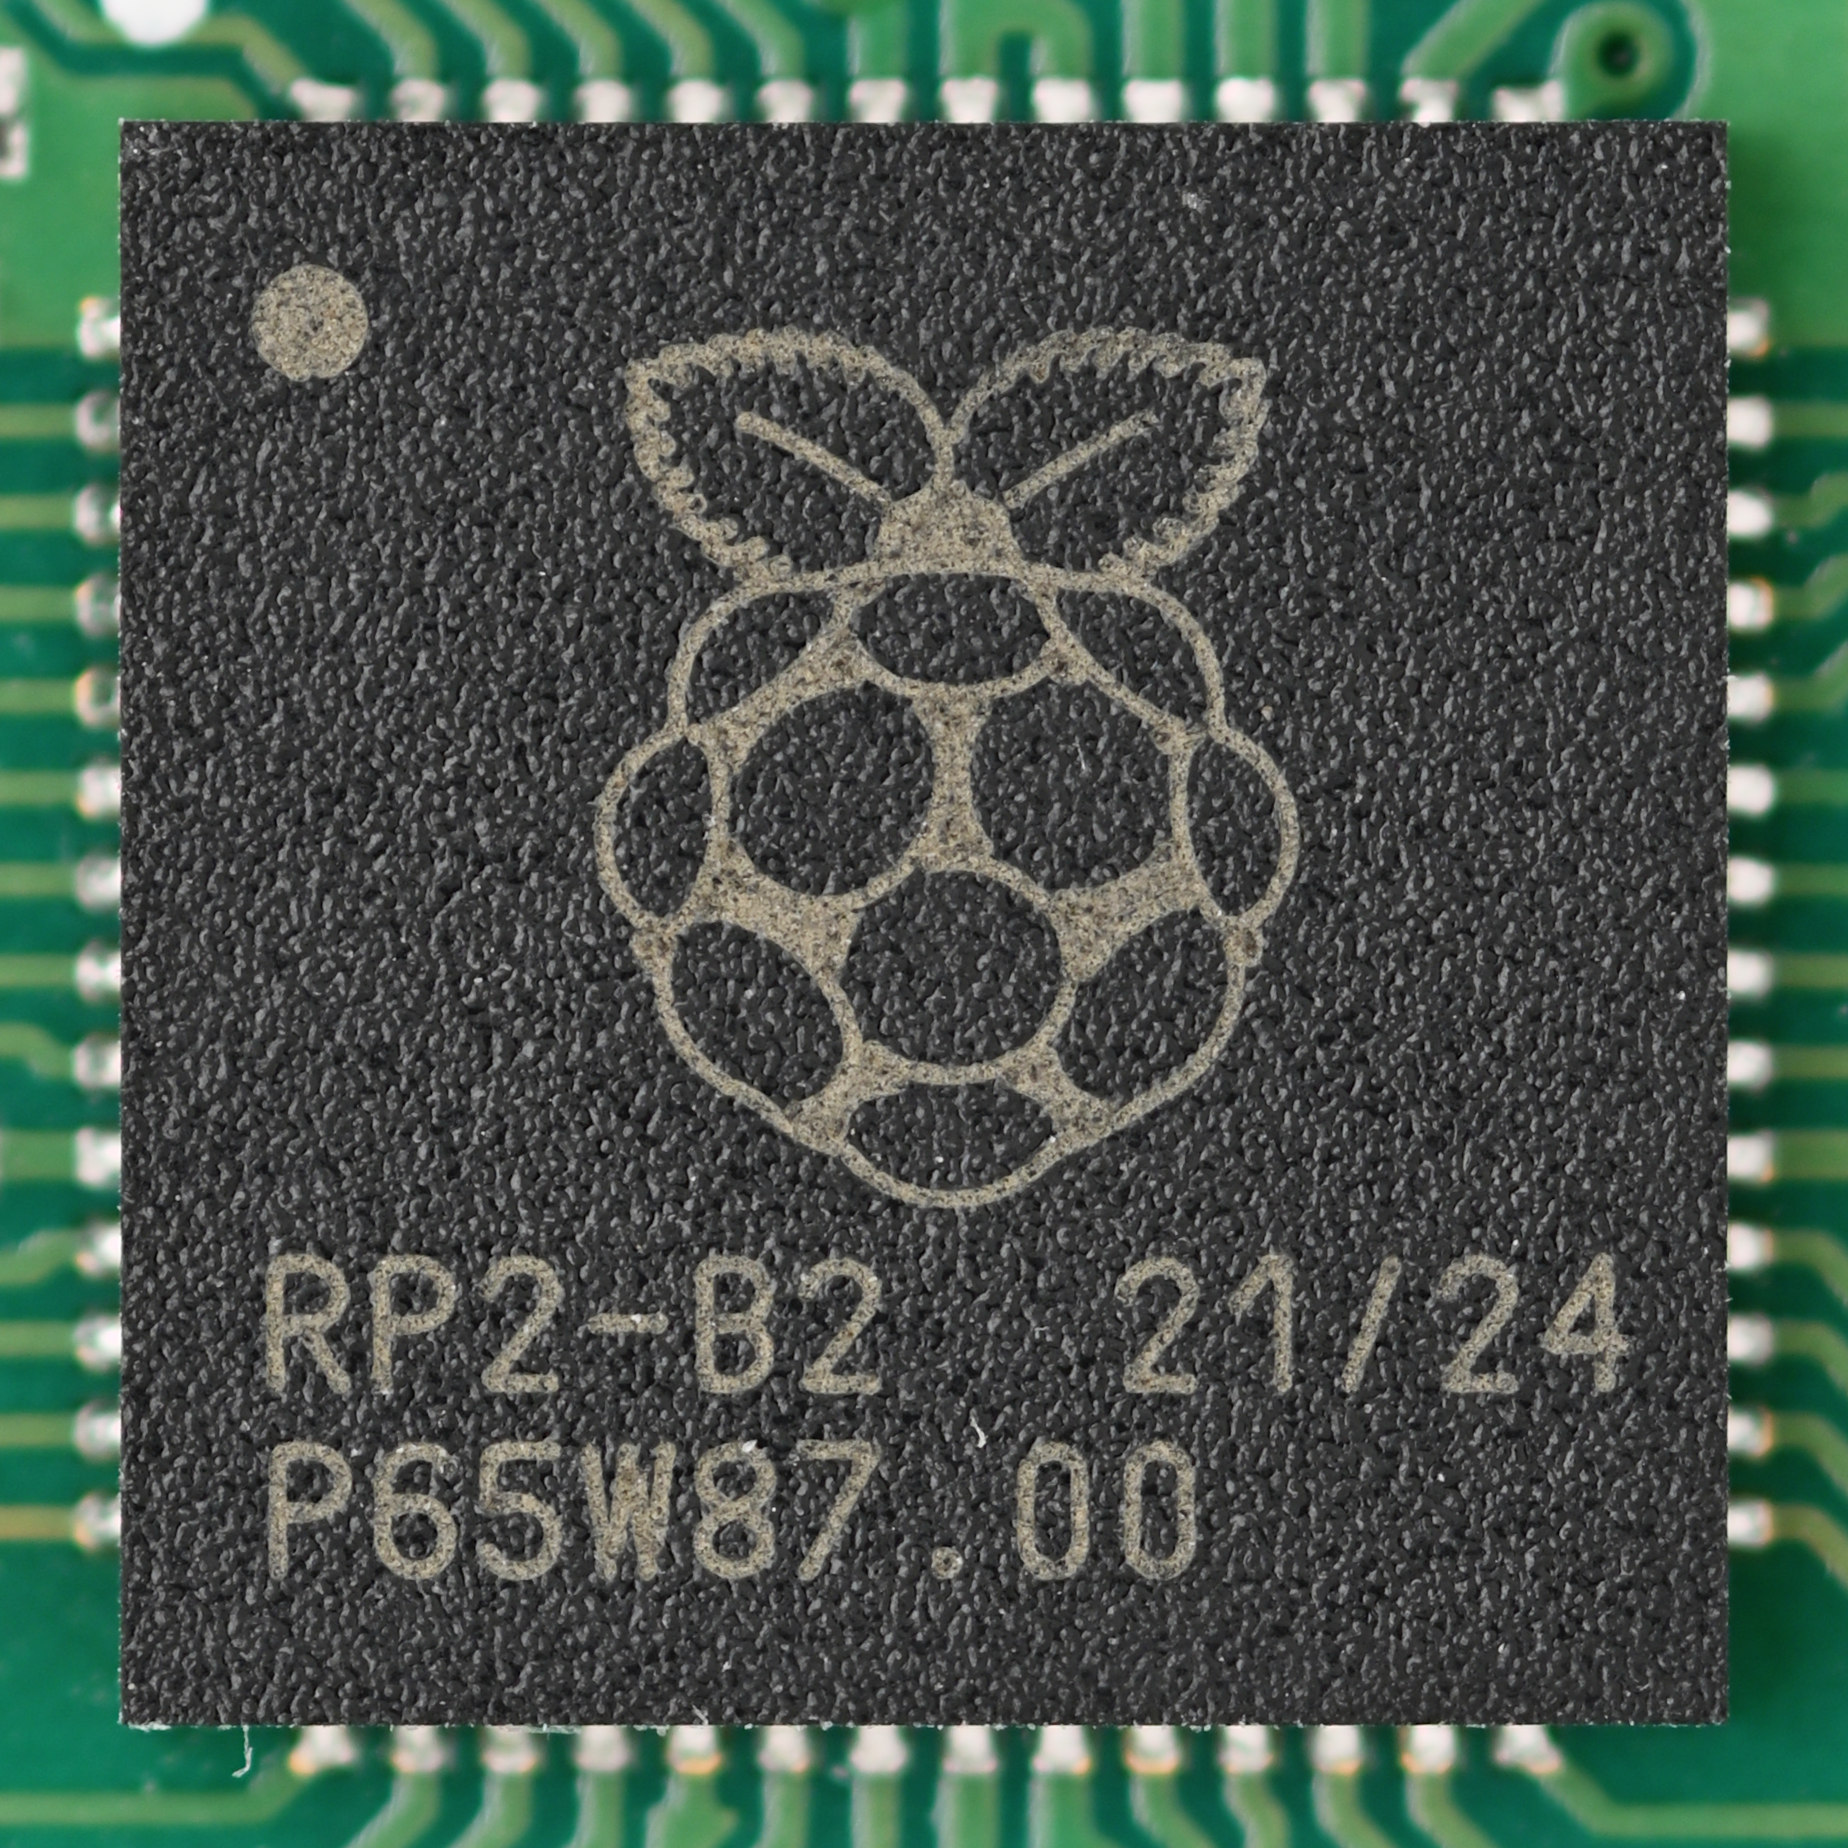 Raspberry Pi 4 - Wikipedia